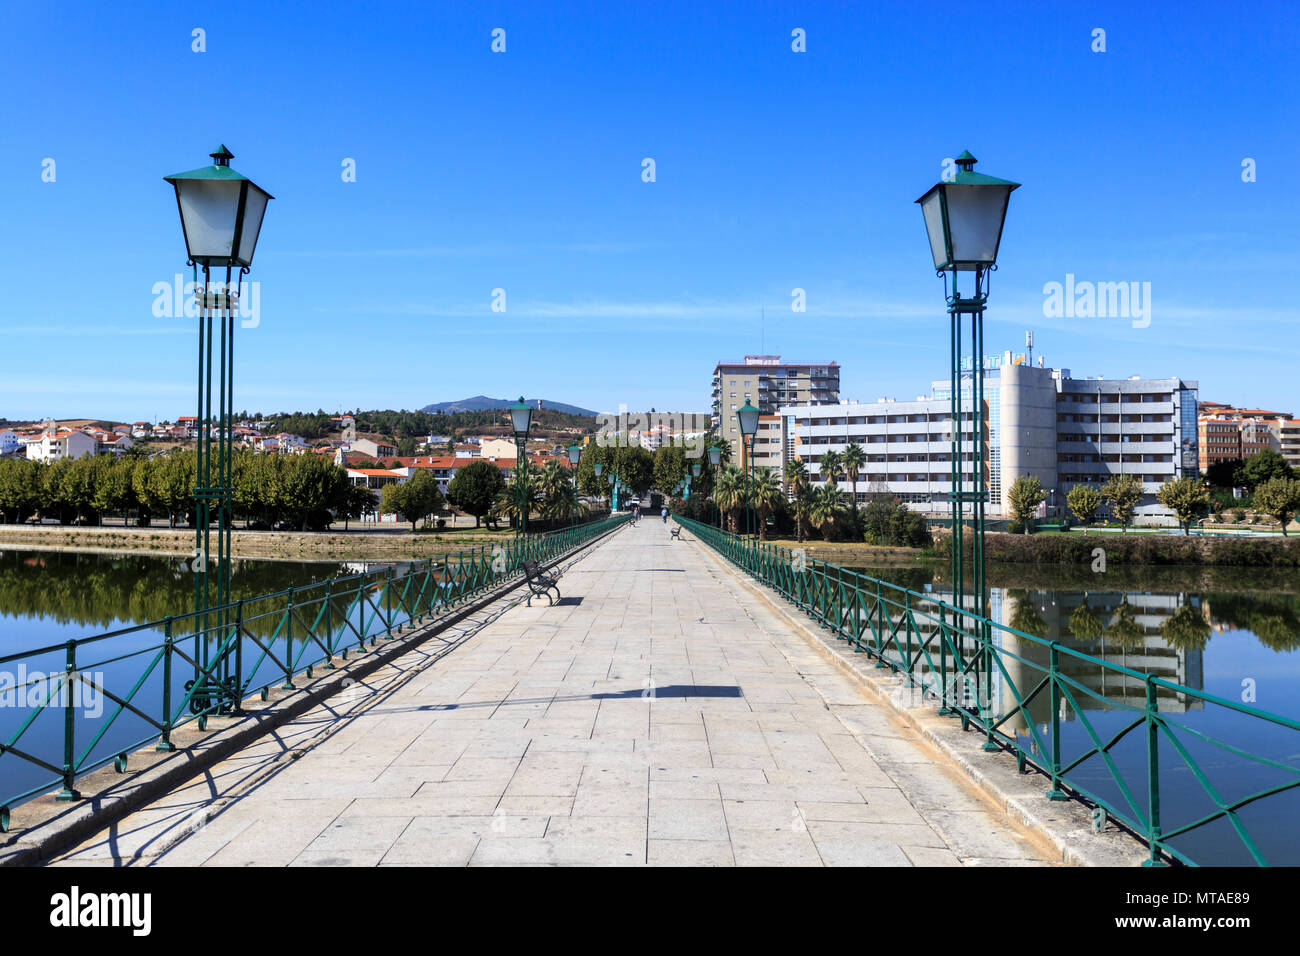 View of the pedestrian bridge over the Tua River in Mirandela, Tras os Montes, Portugal Stock Photo